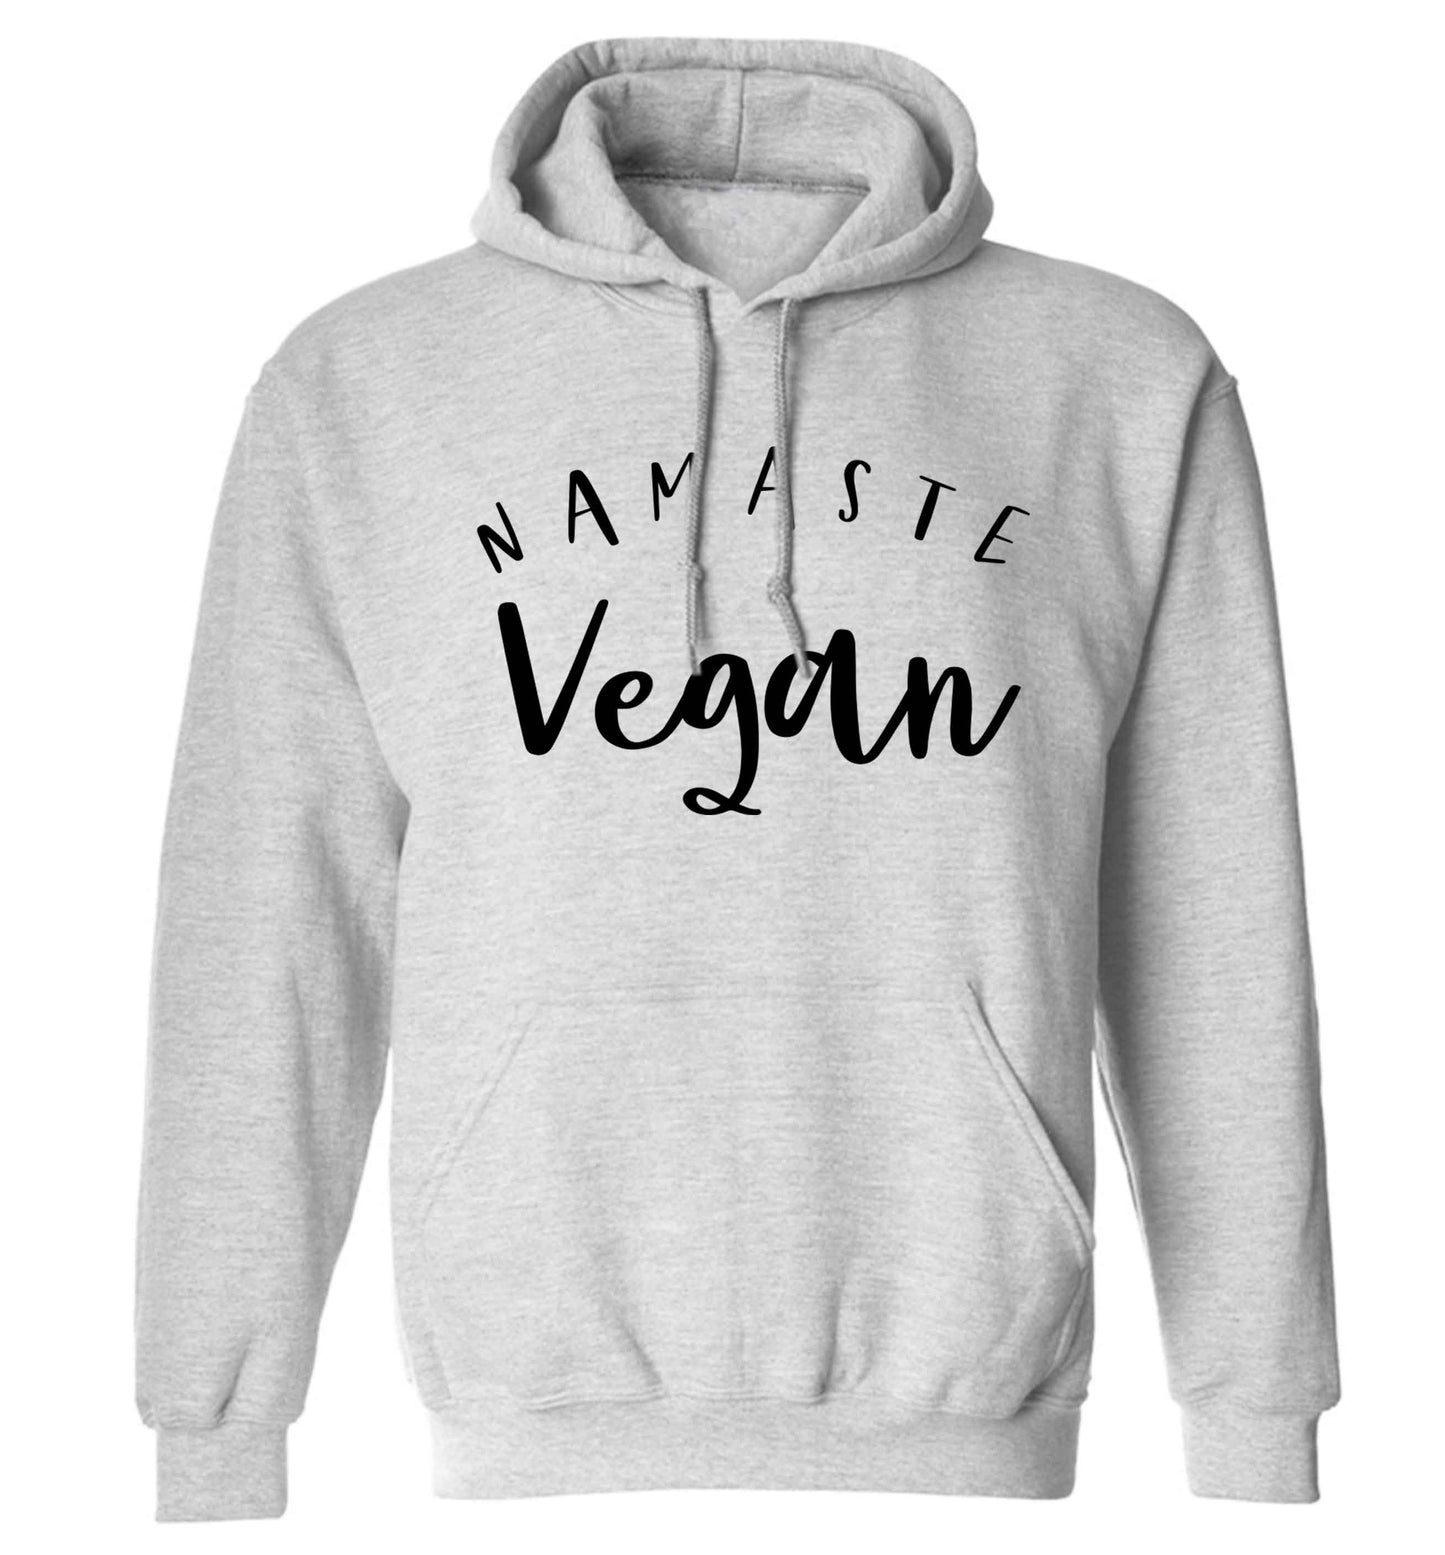 Namaste vegan adults unisex grey hoodie 2XL